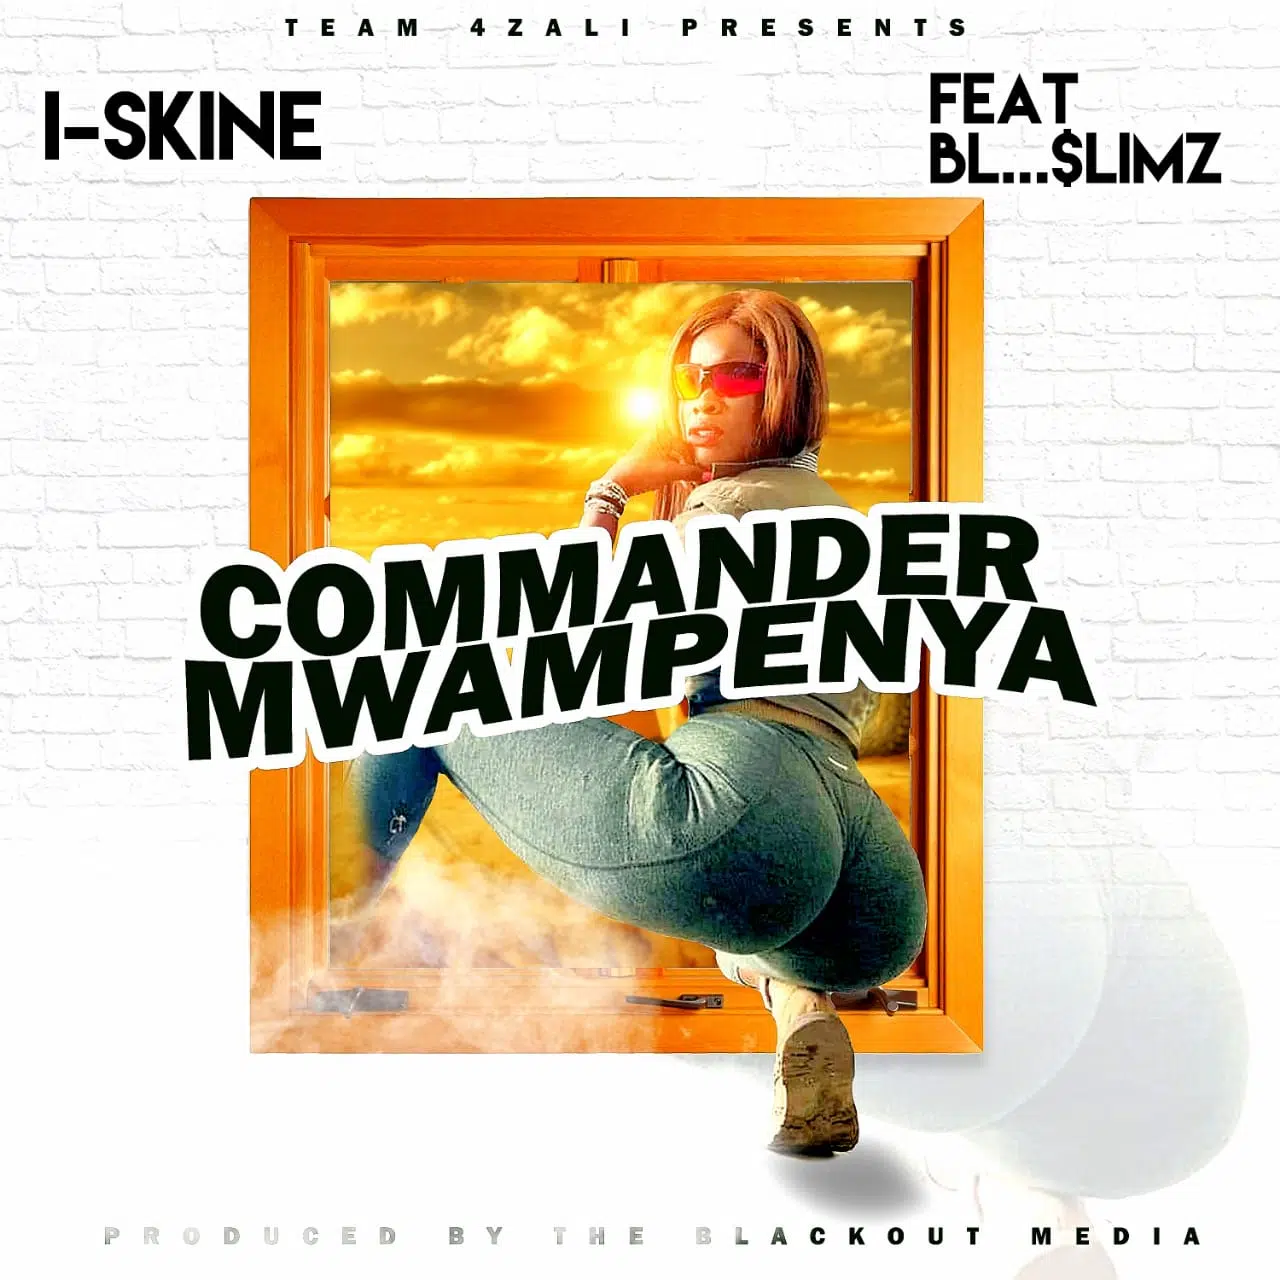 DOWNLOAD: I Skine Feat Blimz – “Commander Mwampenya” Mp3